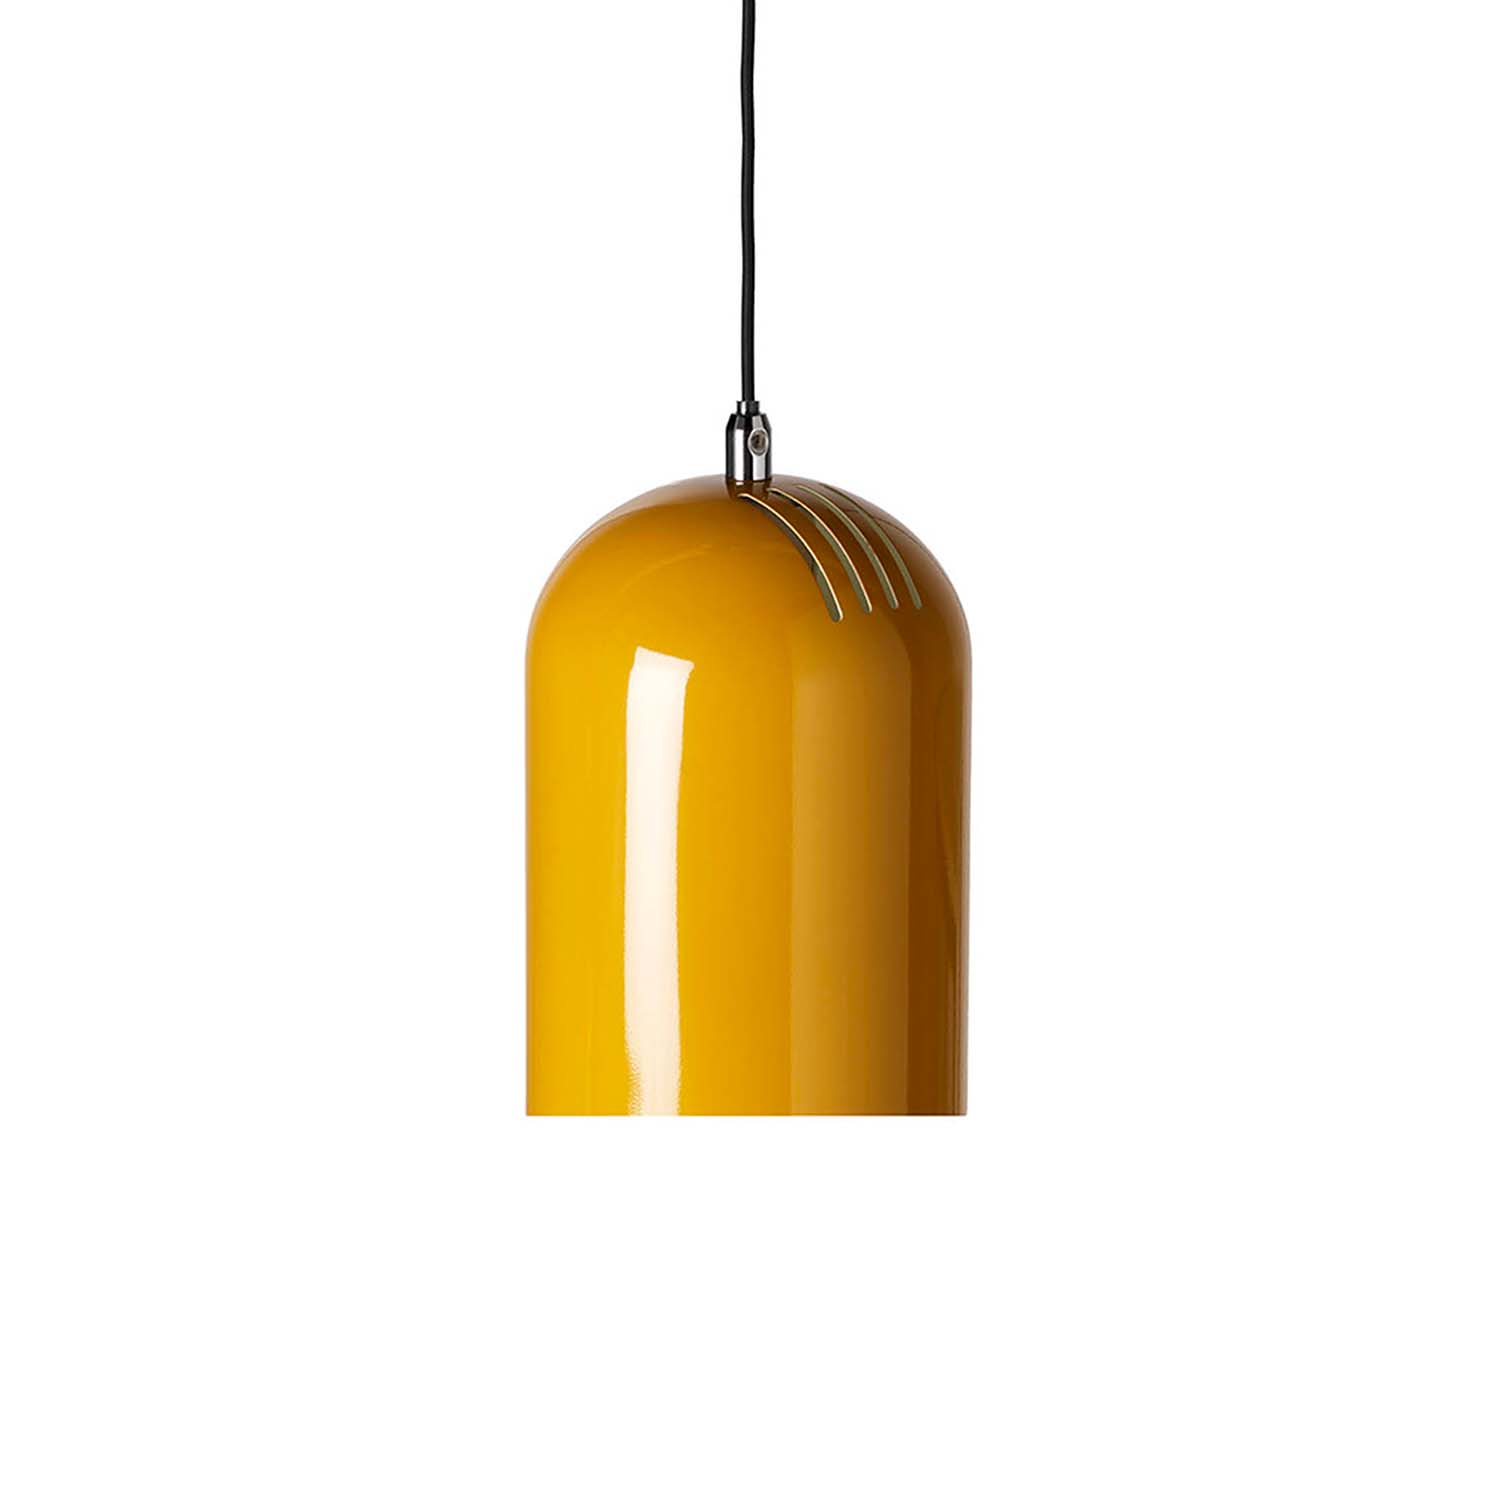 LENNON - Design, simplistic and modern pendant lamp for kitchen